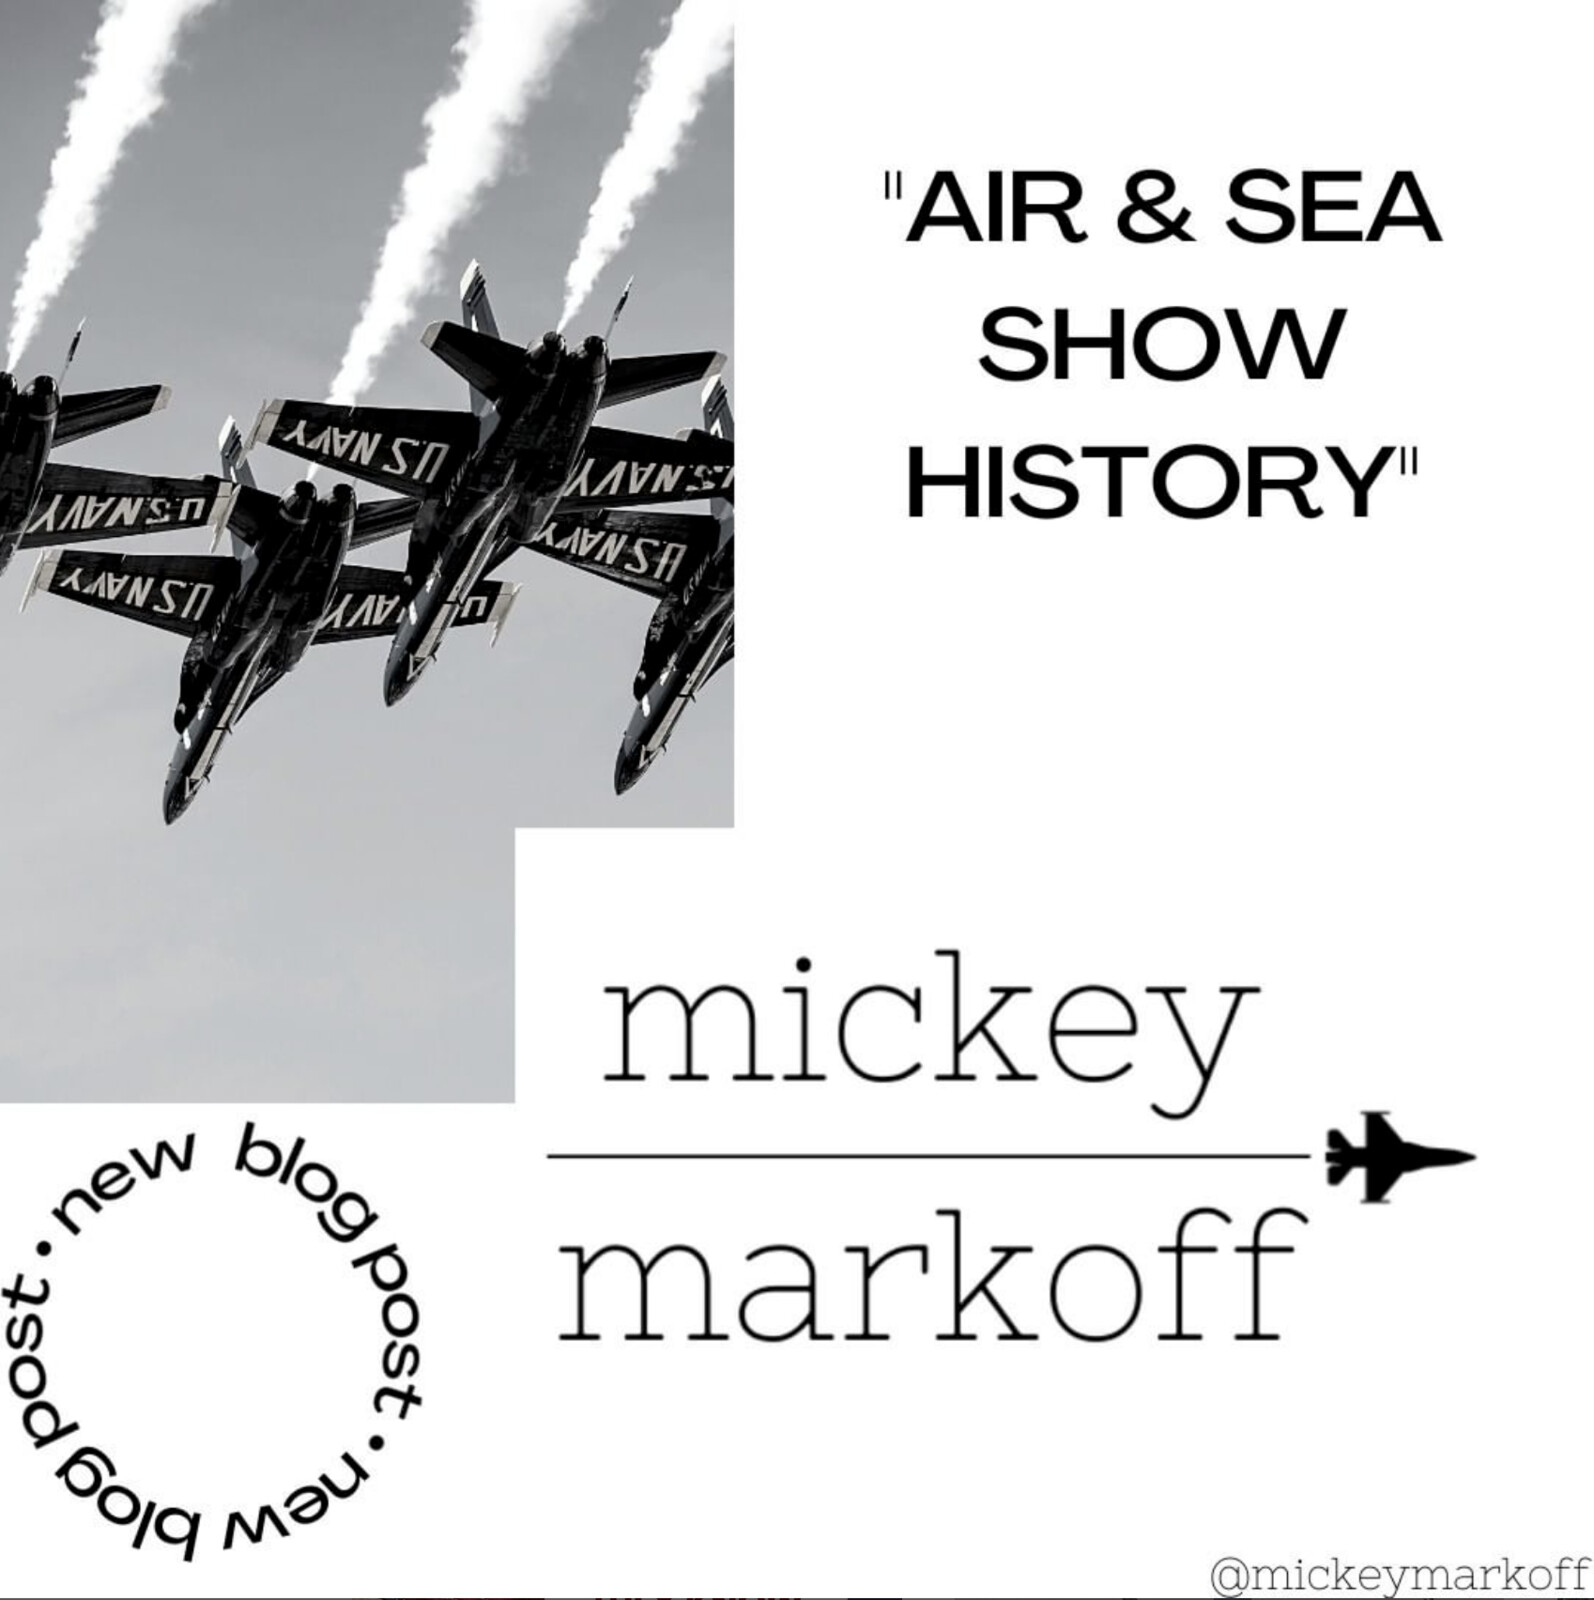 Mickey Markoff - Air and Sea Show Executive Producer - “Air and Sea Show History"